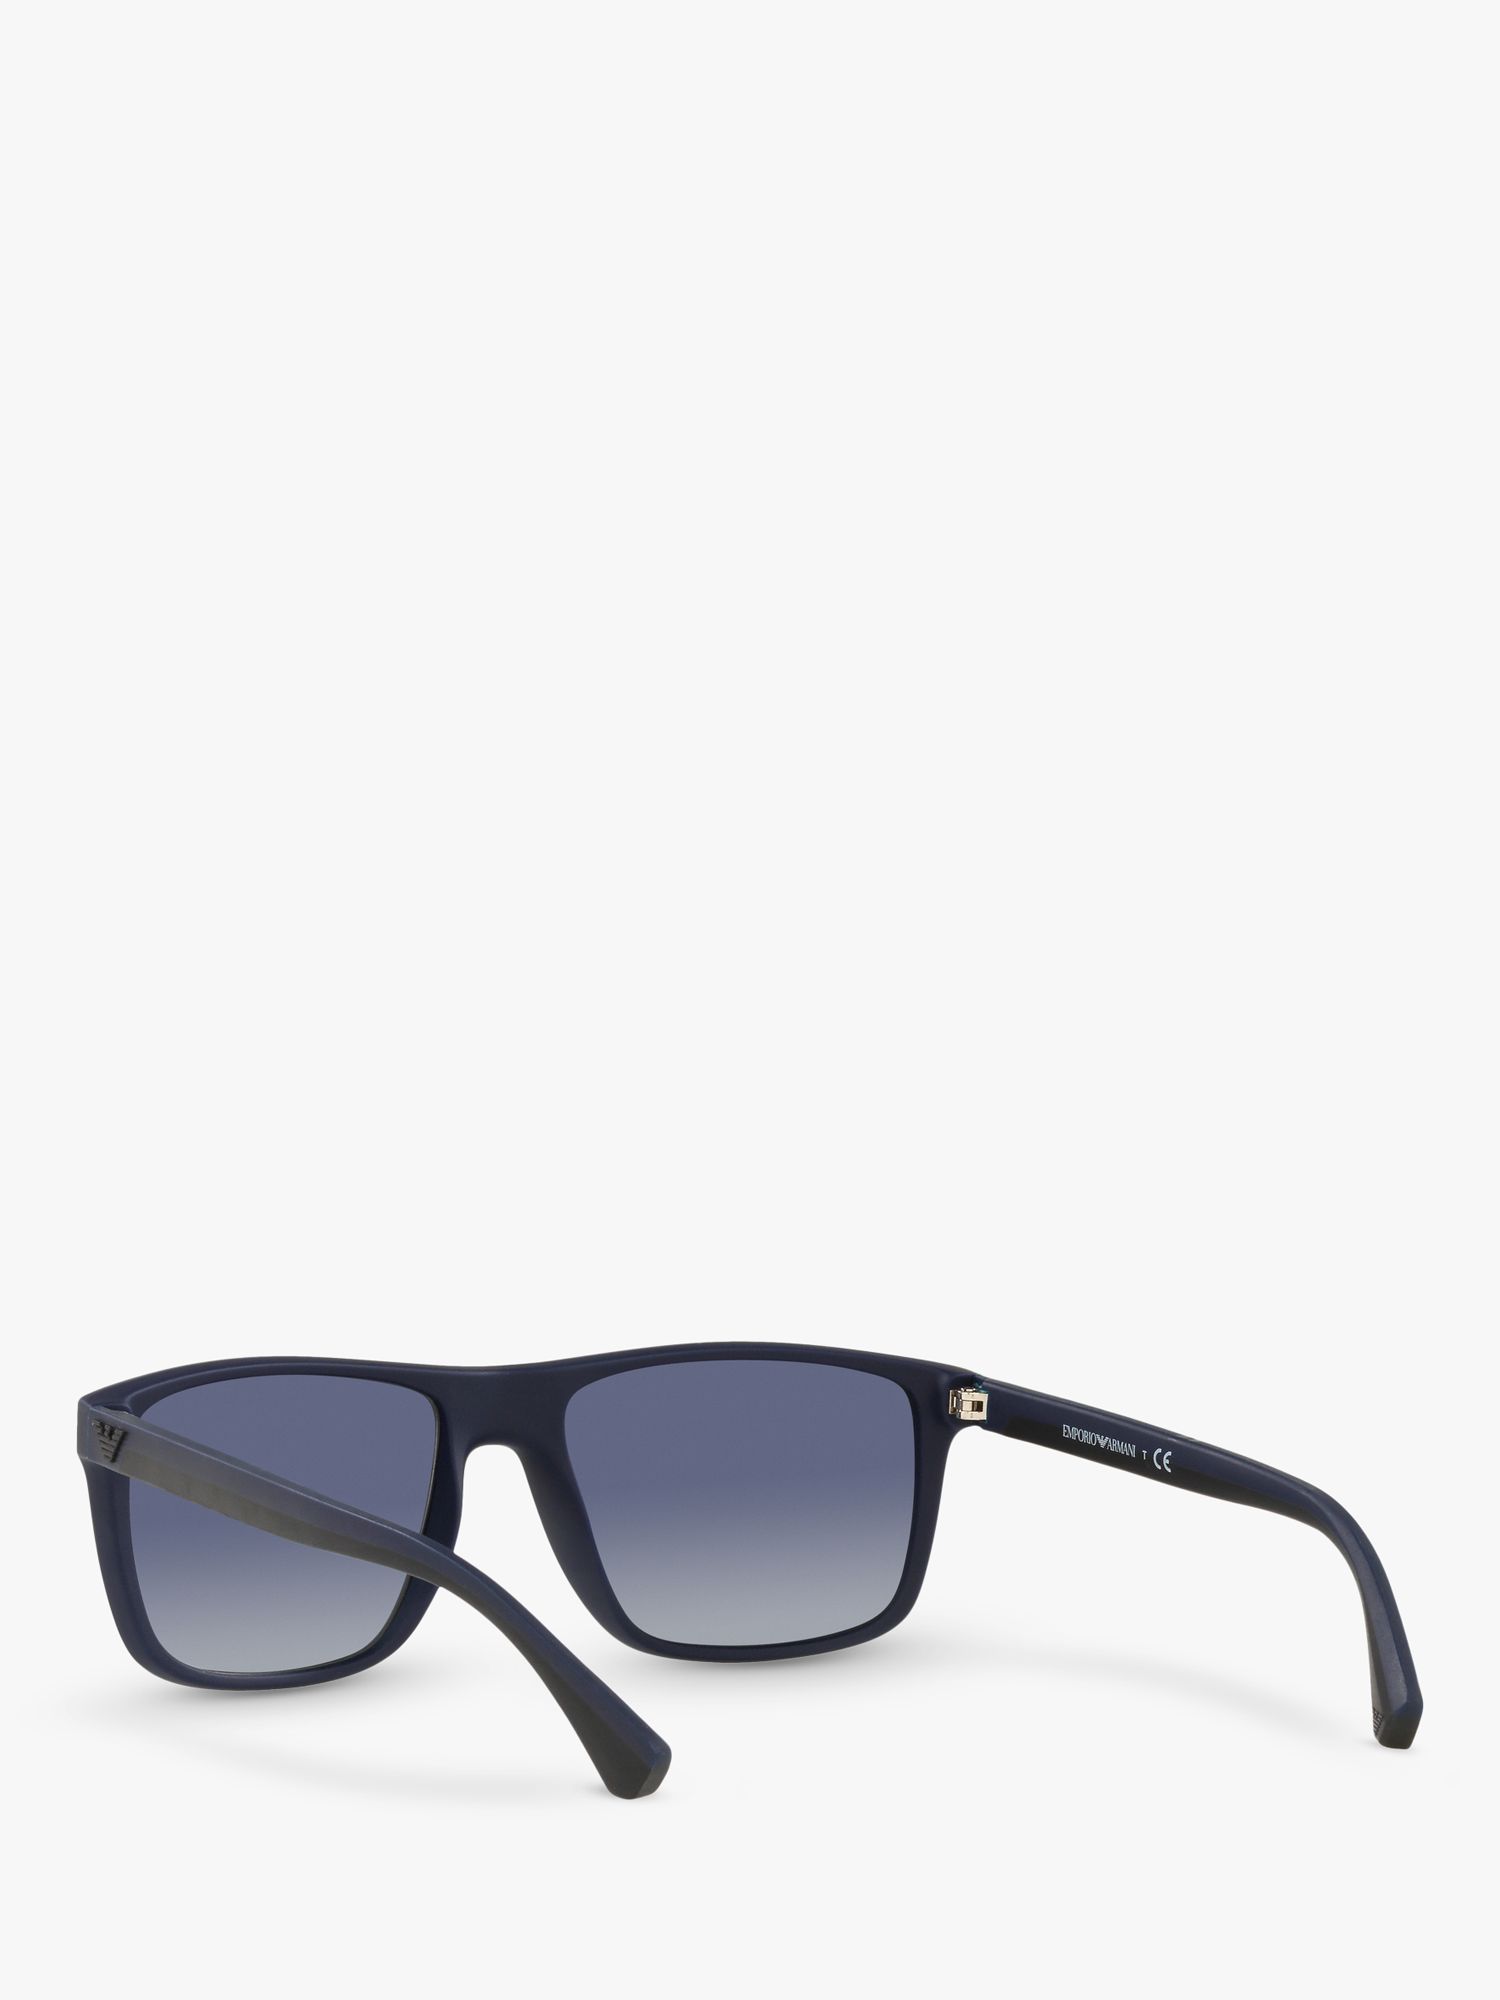 Emporio Armani EA4033 Men's Square Sunglasses, Black/Blue Gradient at John  Lewis & Partners